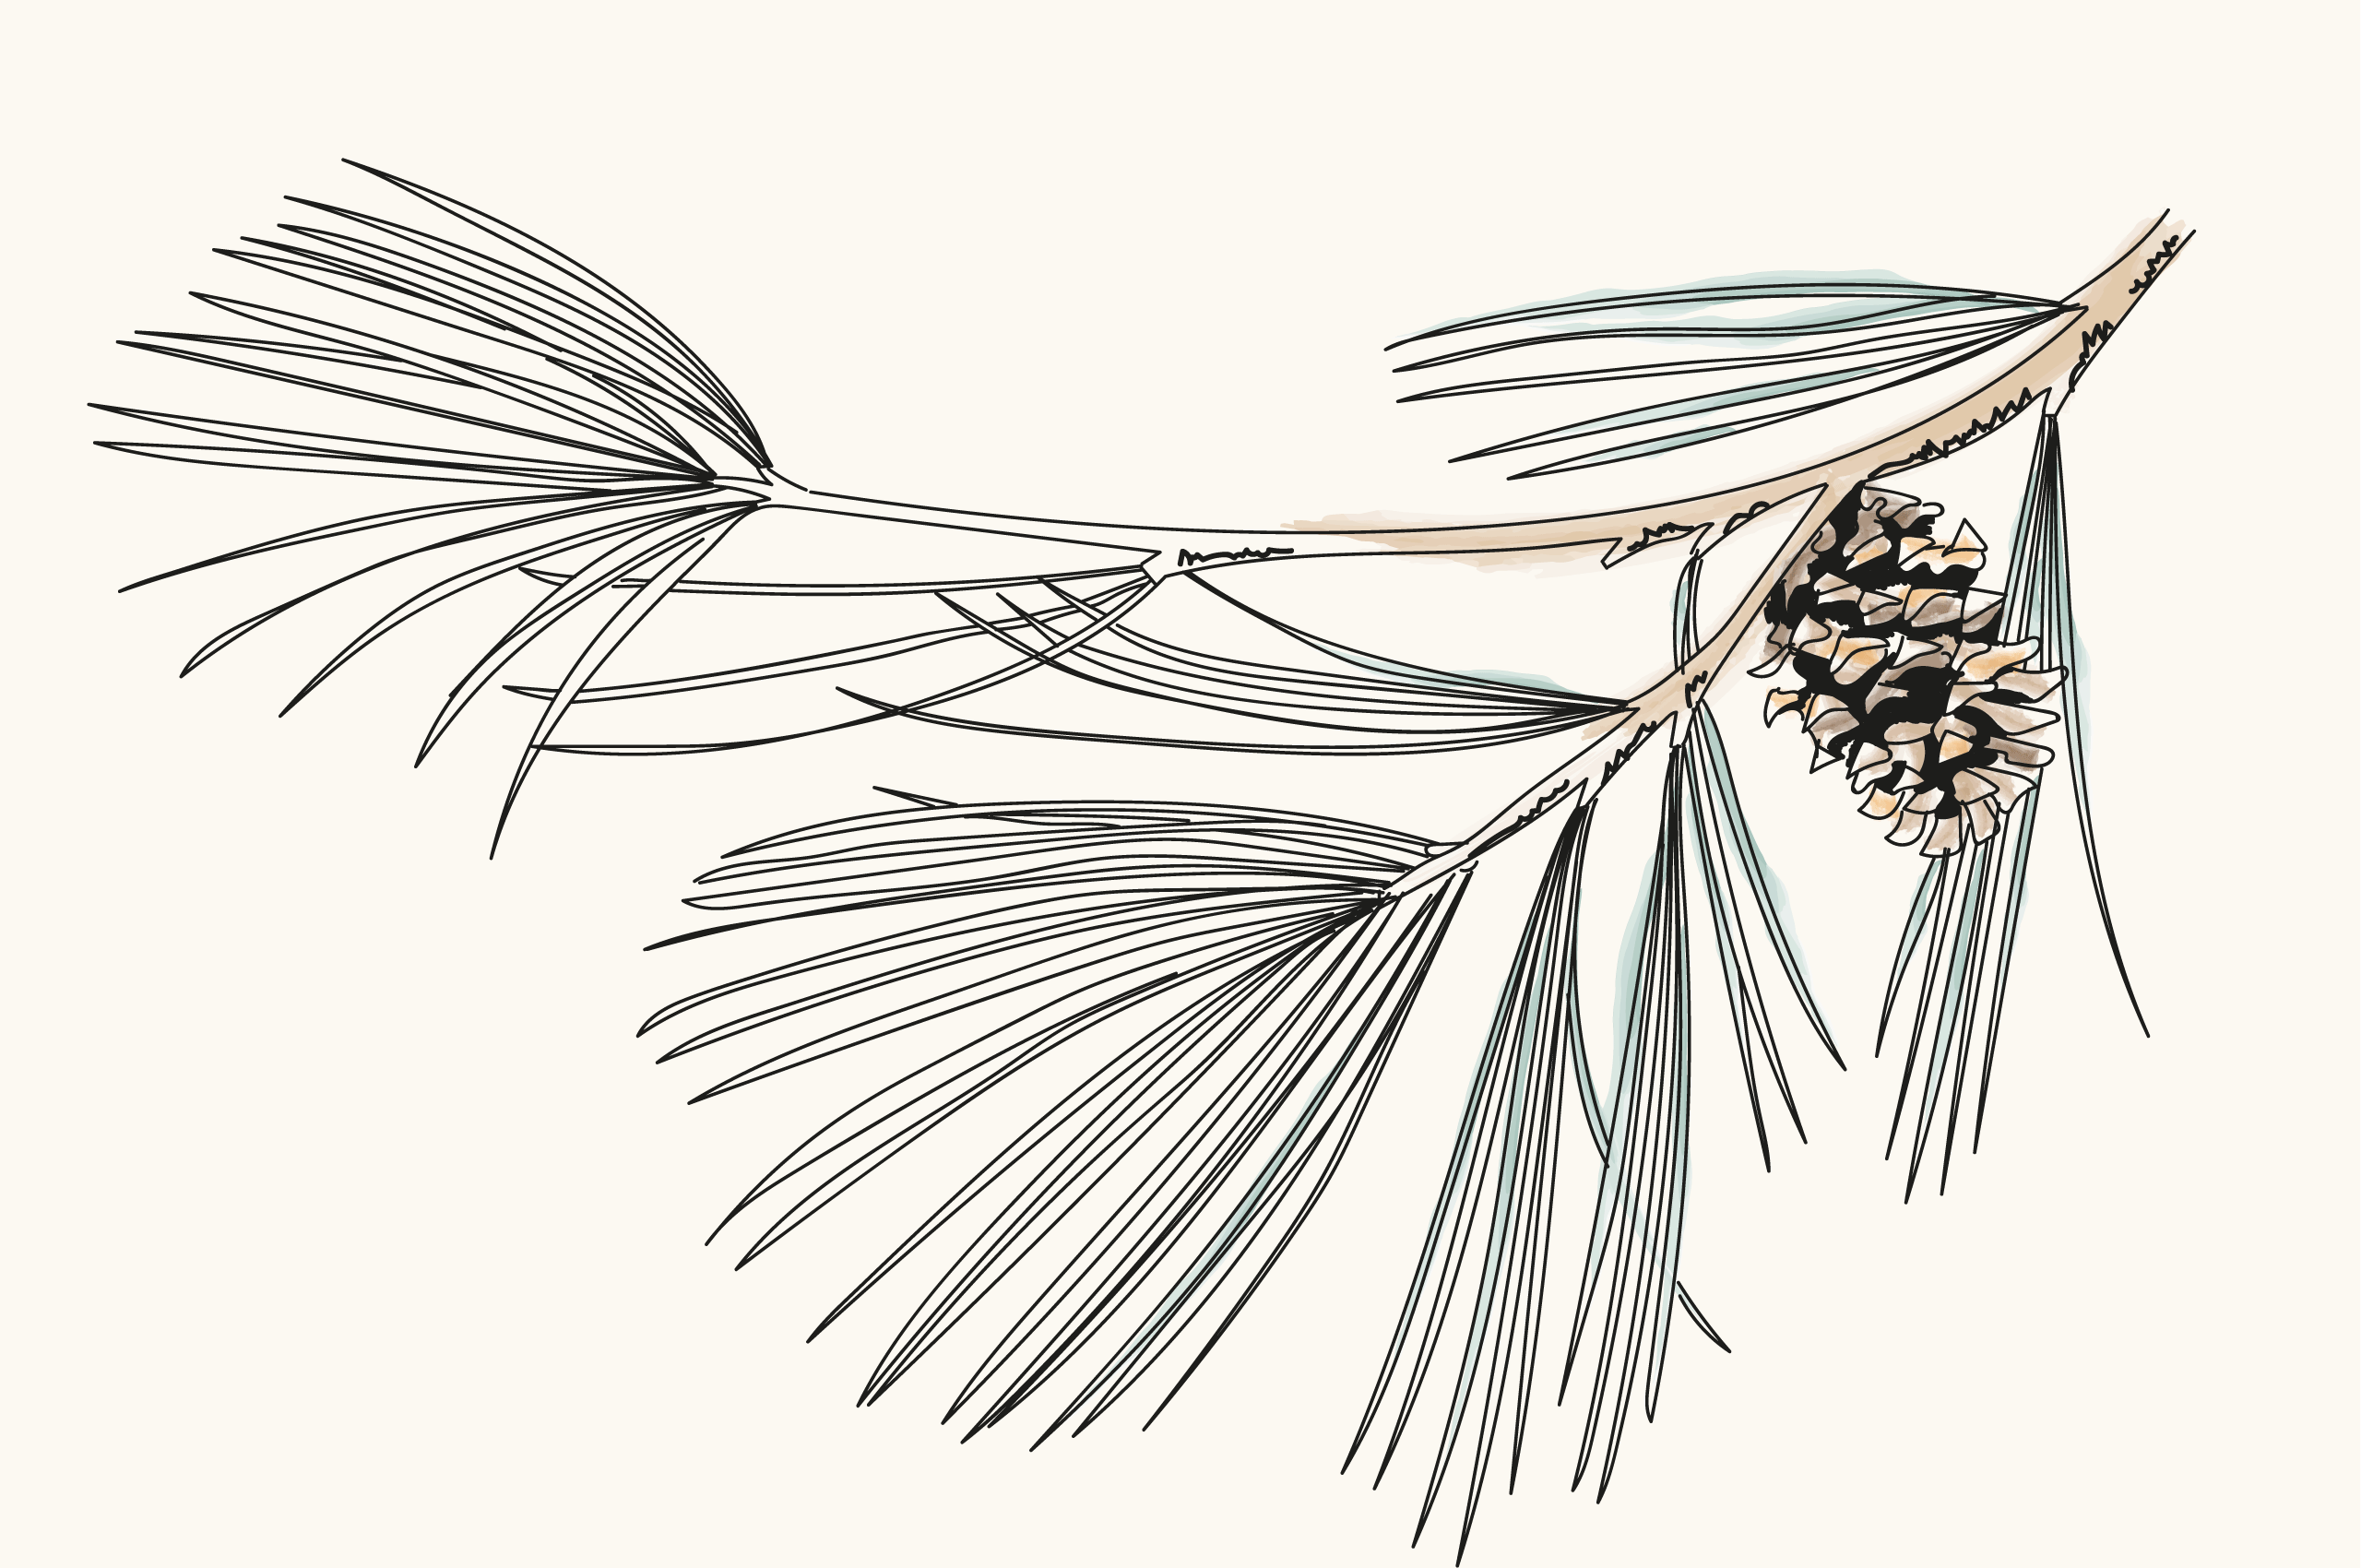 conifer-sketch